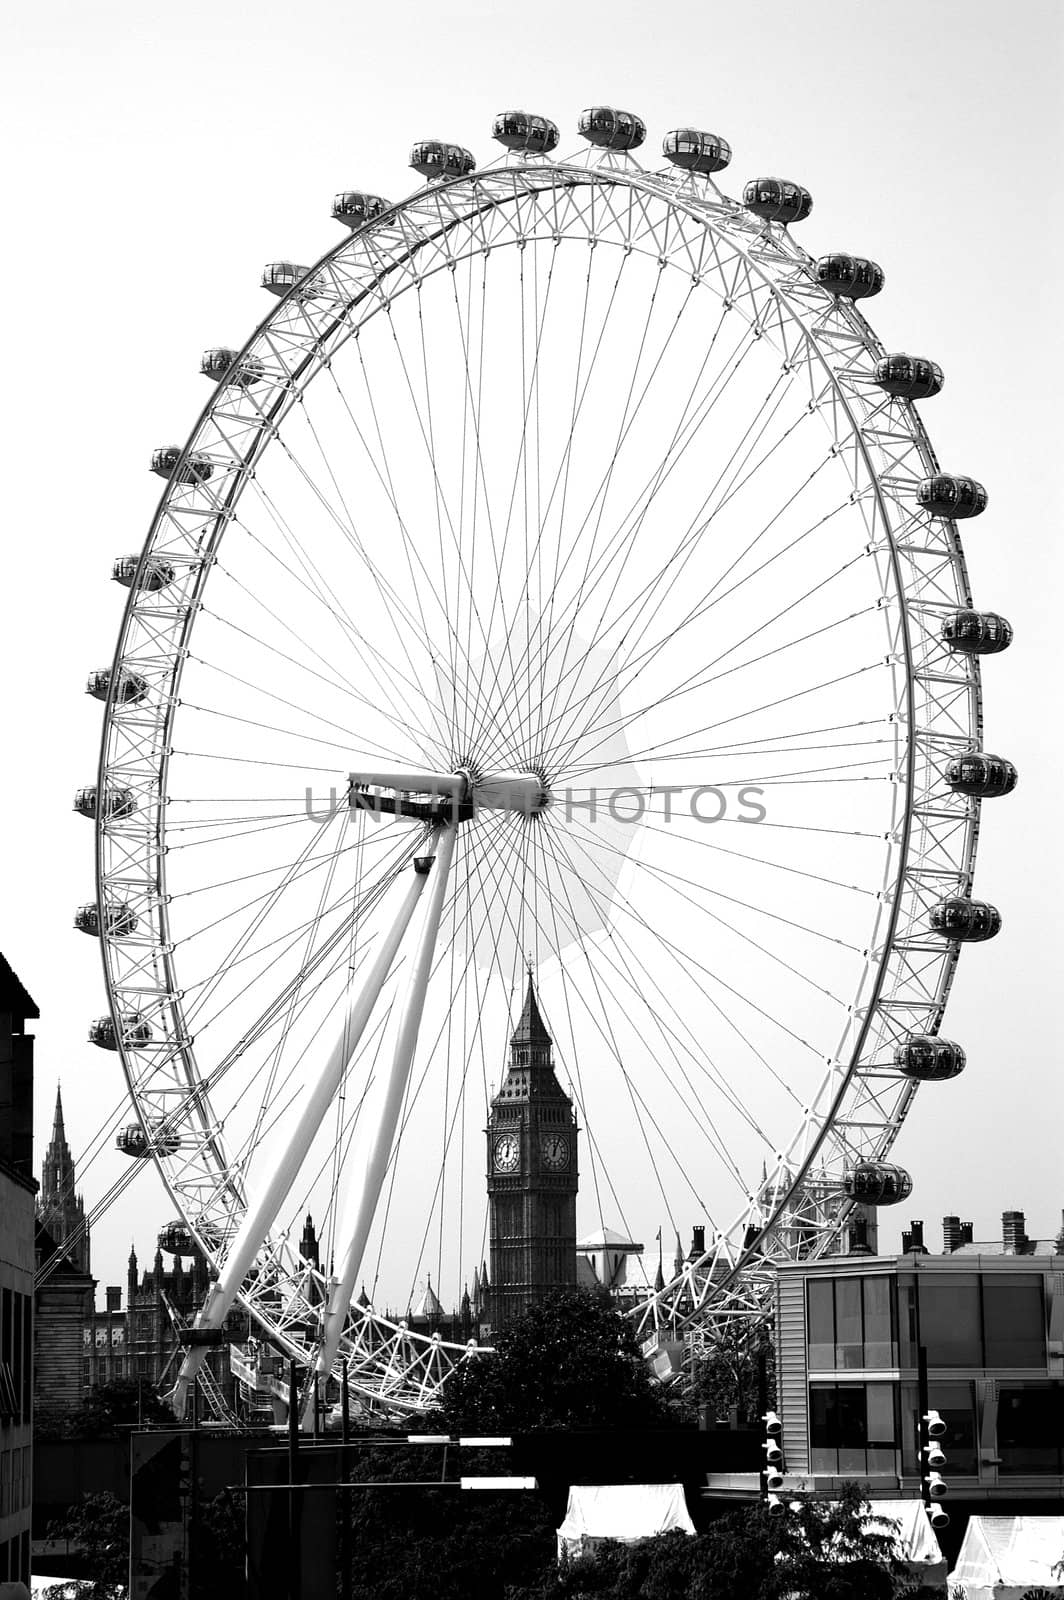 London eye with Big Ben